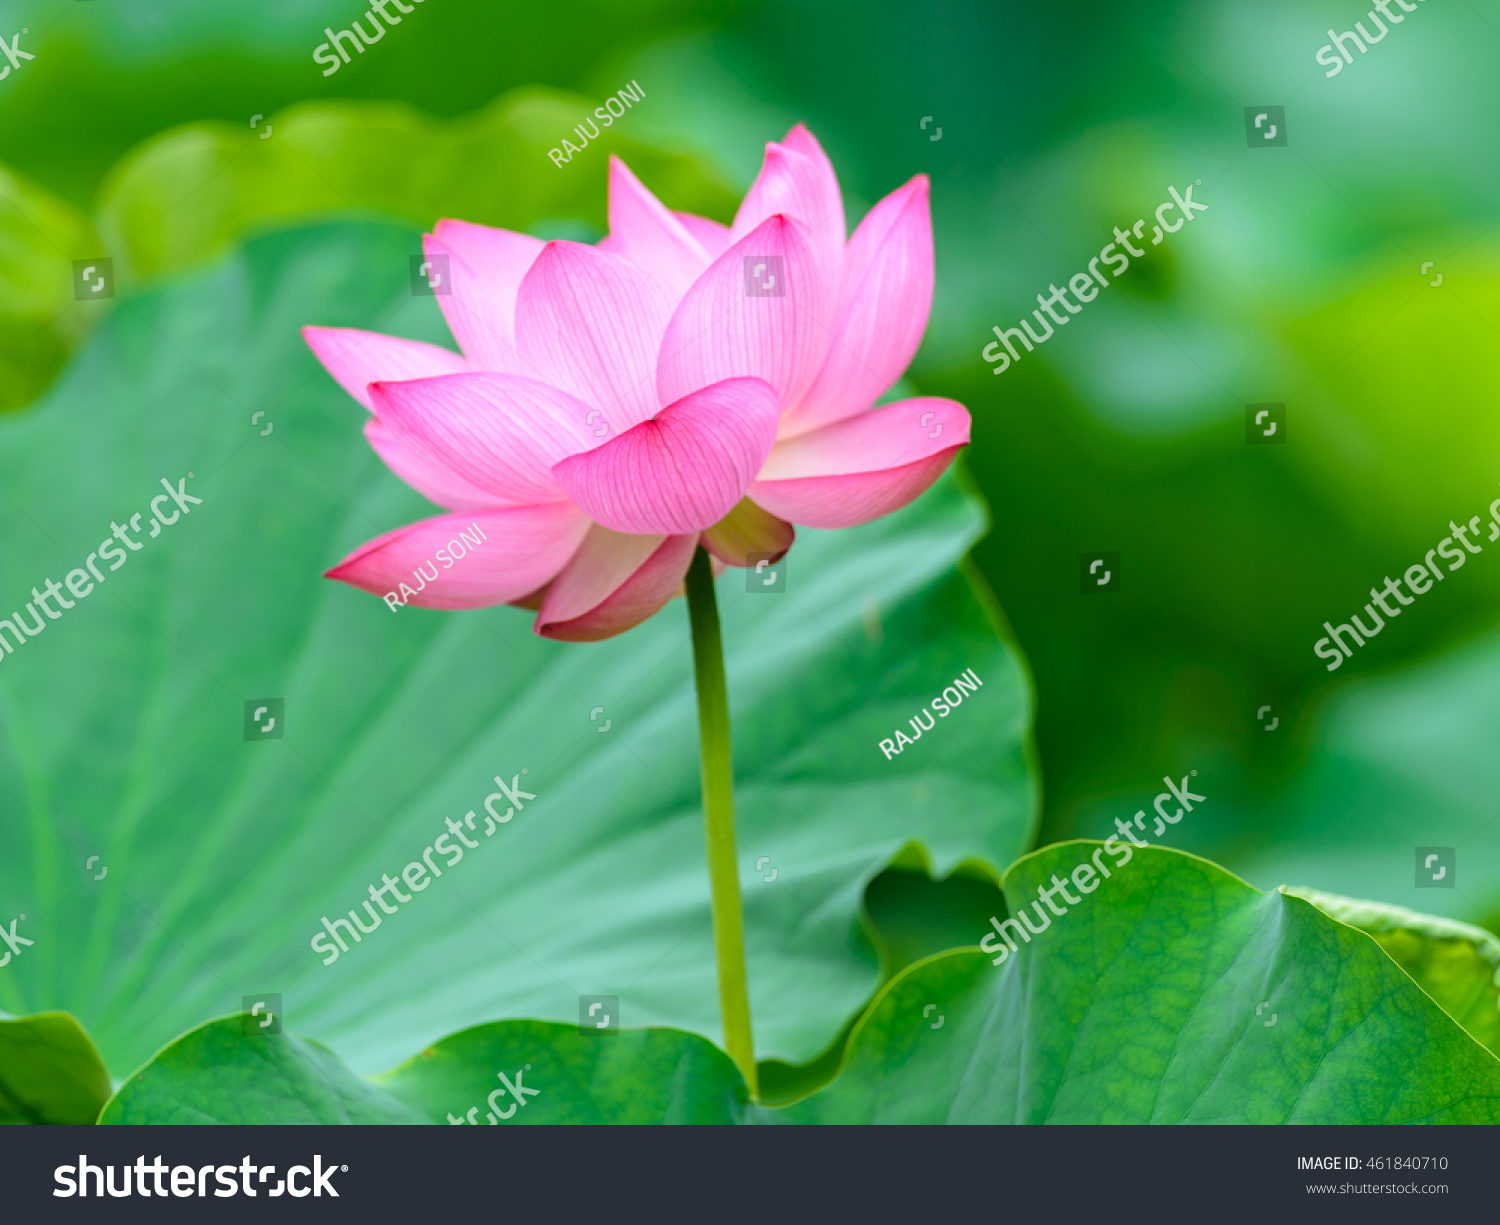 lotus flower nelumbo nucifera indian lotus stock photo (edit now